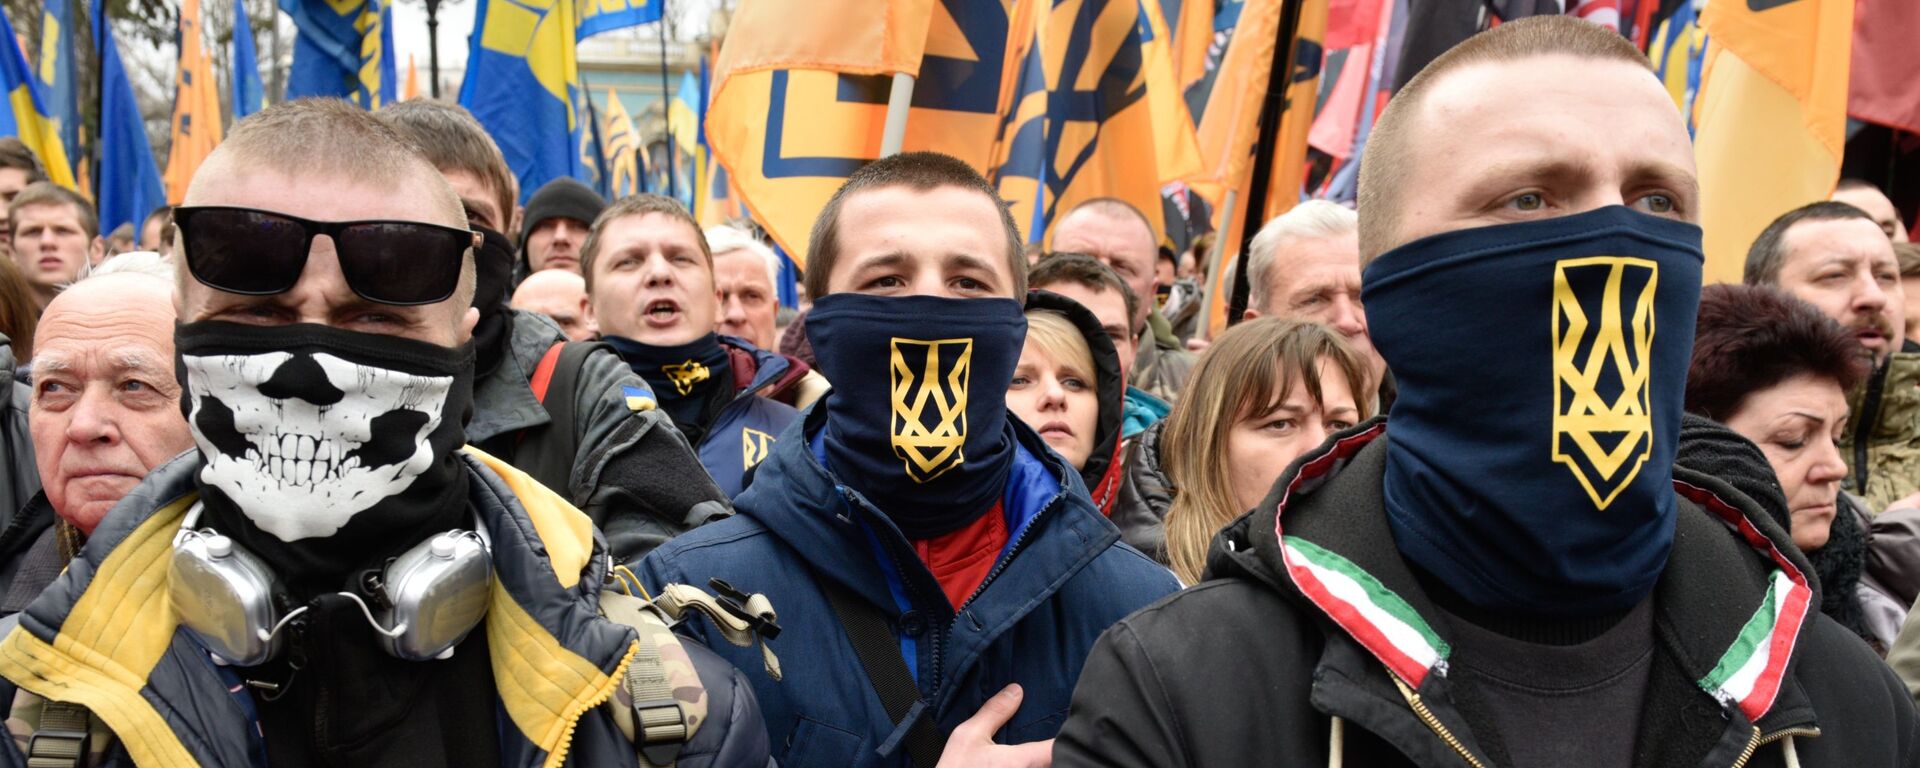 Unos manifestantes radicales durante las protestas en Kiev, Ucrania - Sputnik Mundo, 1920, 27.11.2020